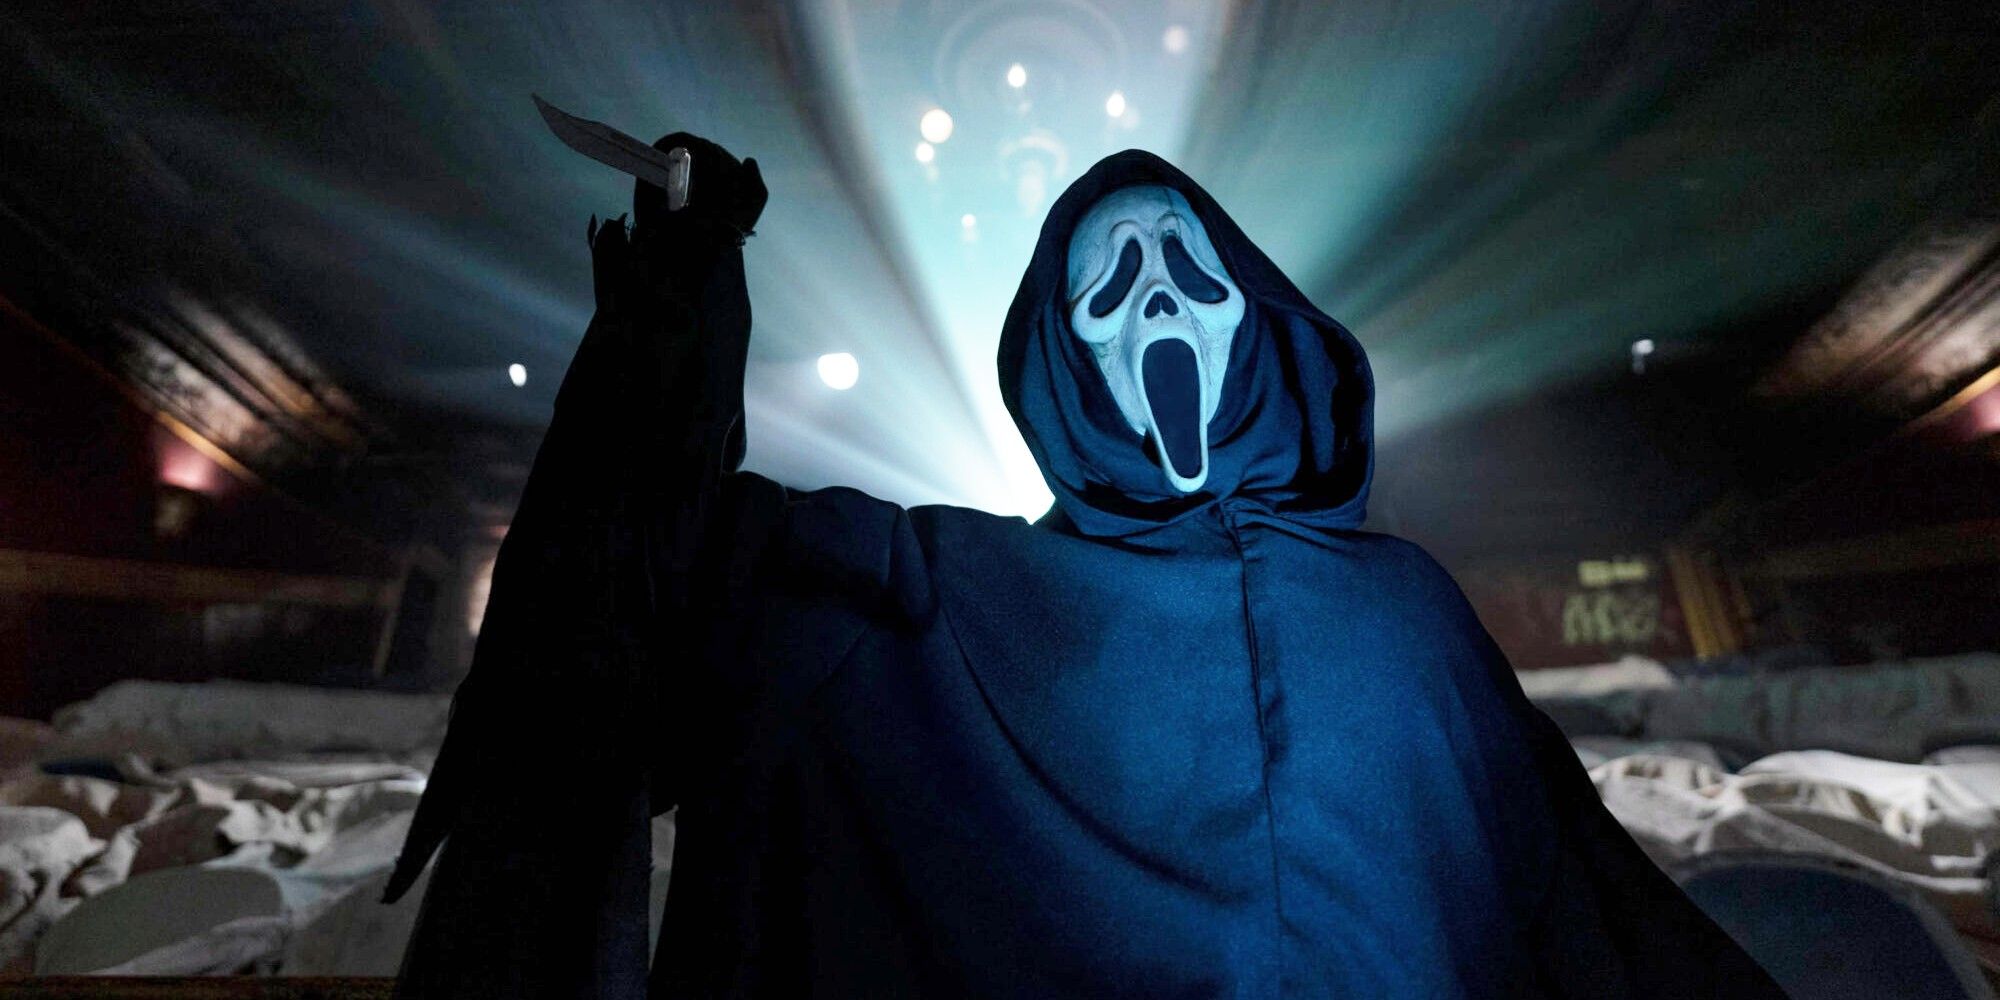 Scream 6 predictions: DK Nation takes a stab at predicting Scream